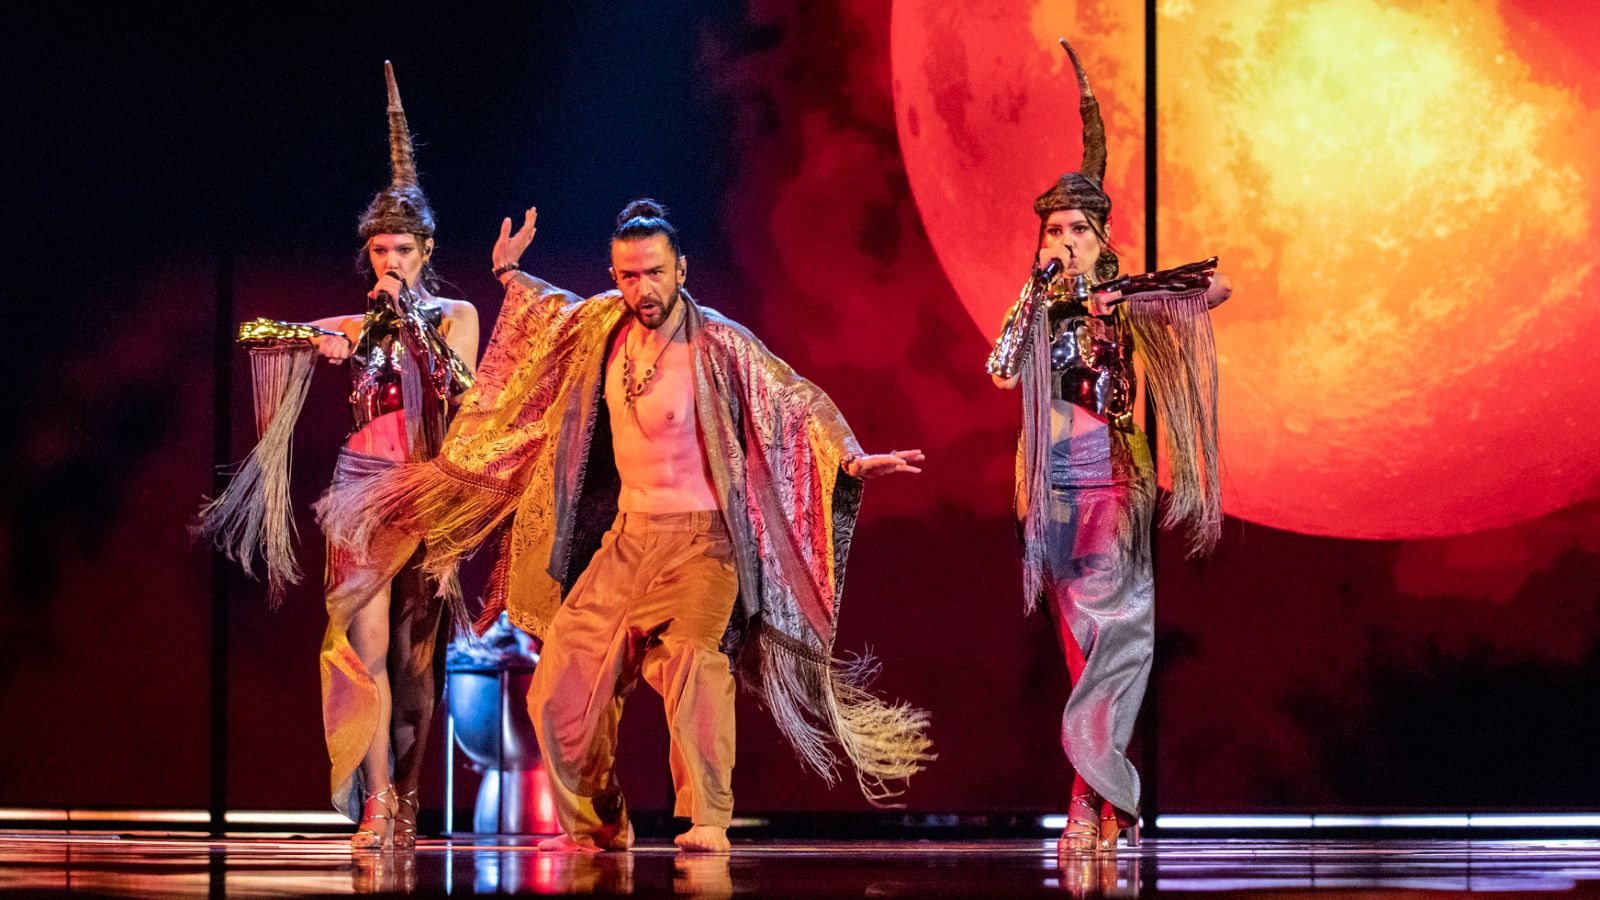 Eurovisión 2023 - Moldavia: Pasha Parfeni canta "Soarele Si Luna" en la primera semifinal